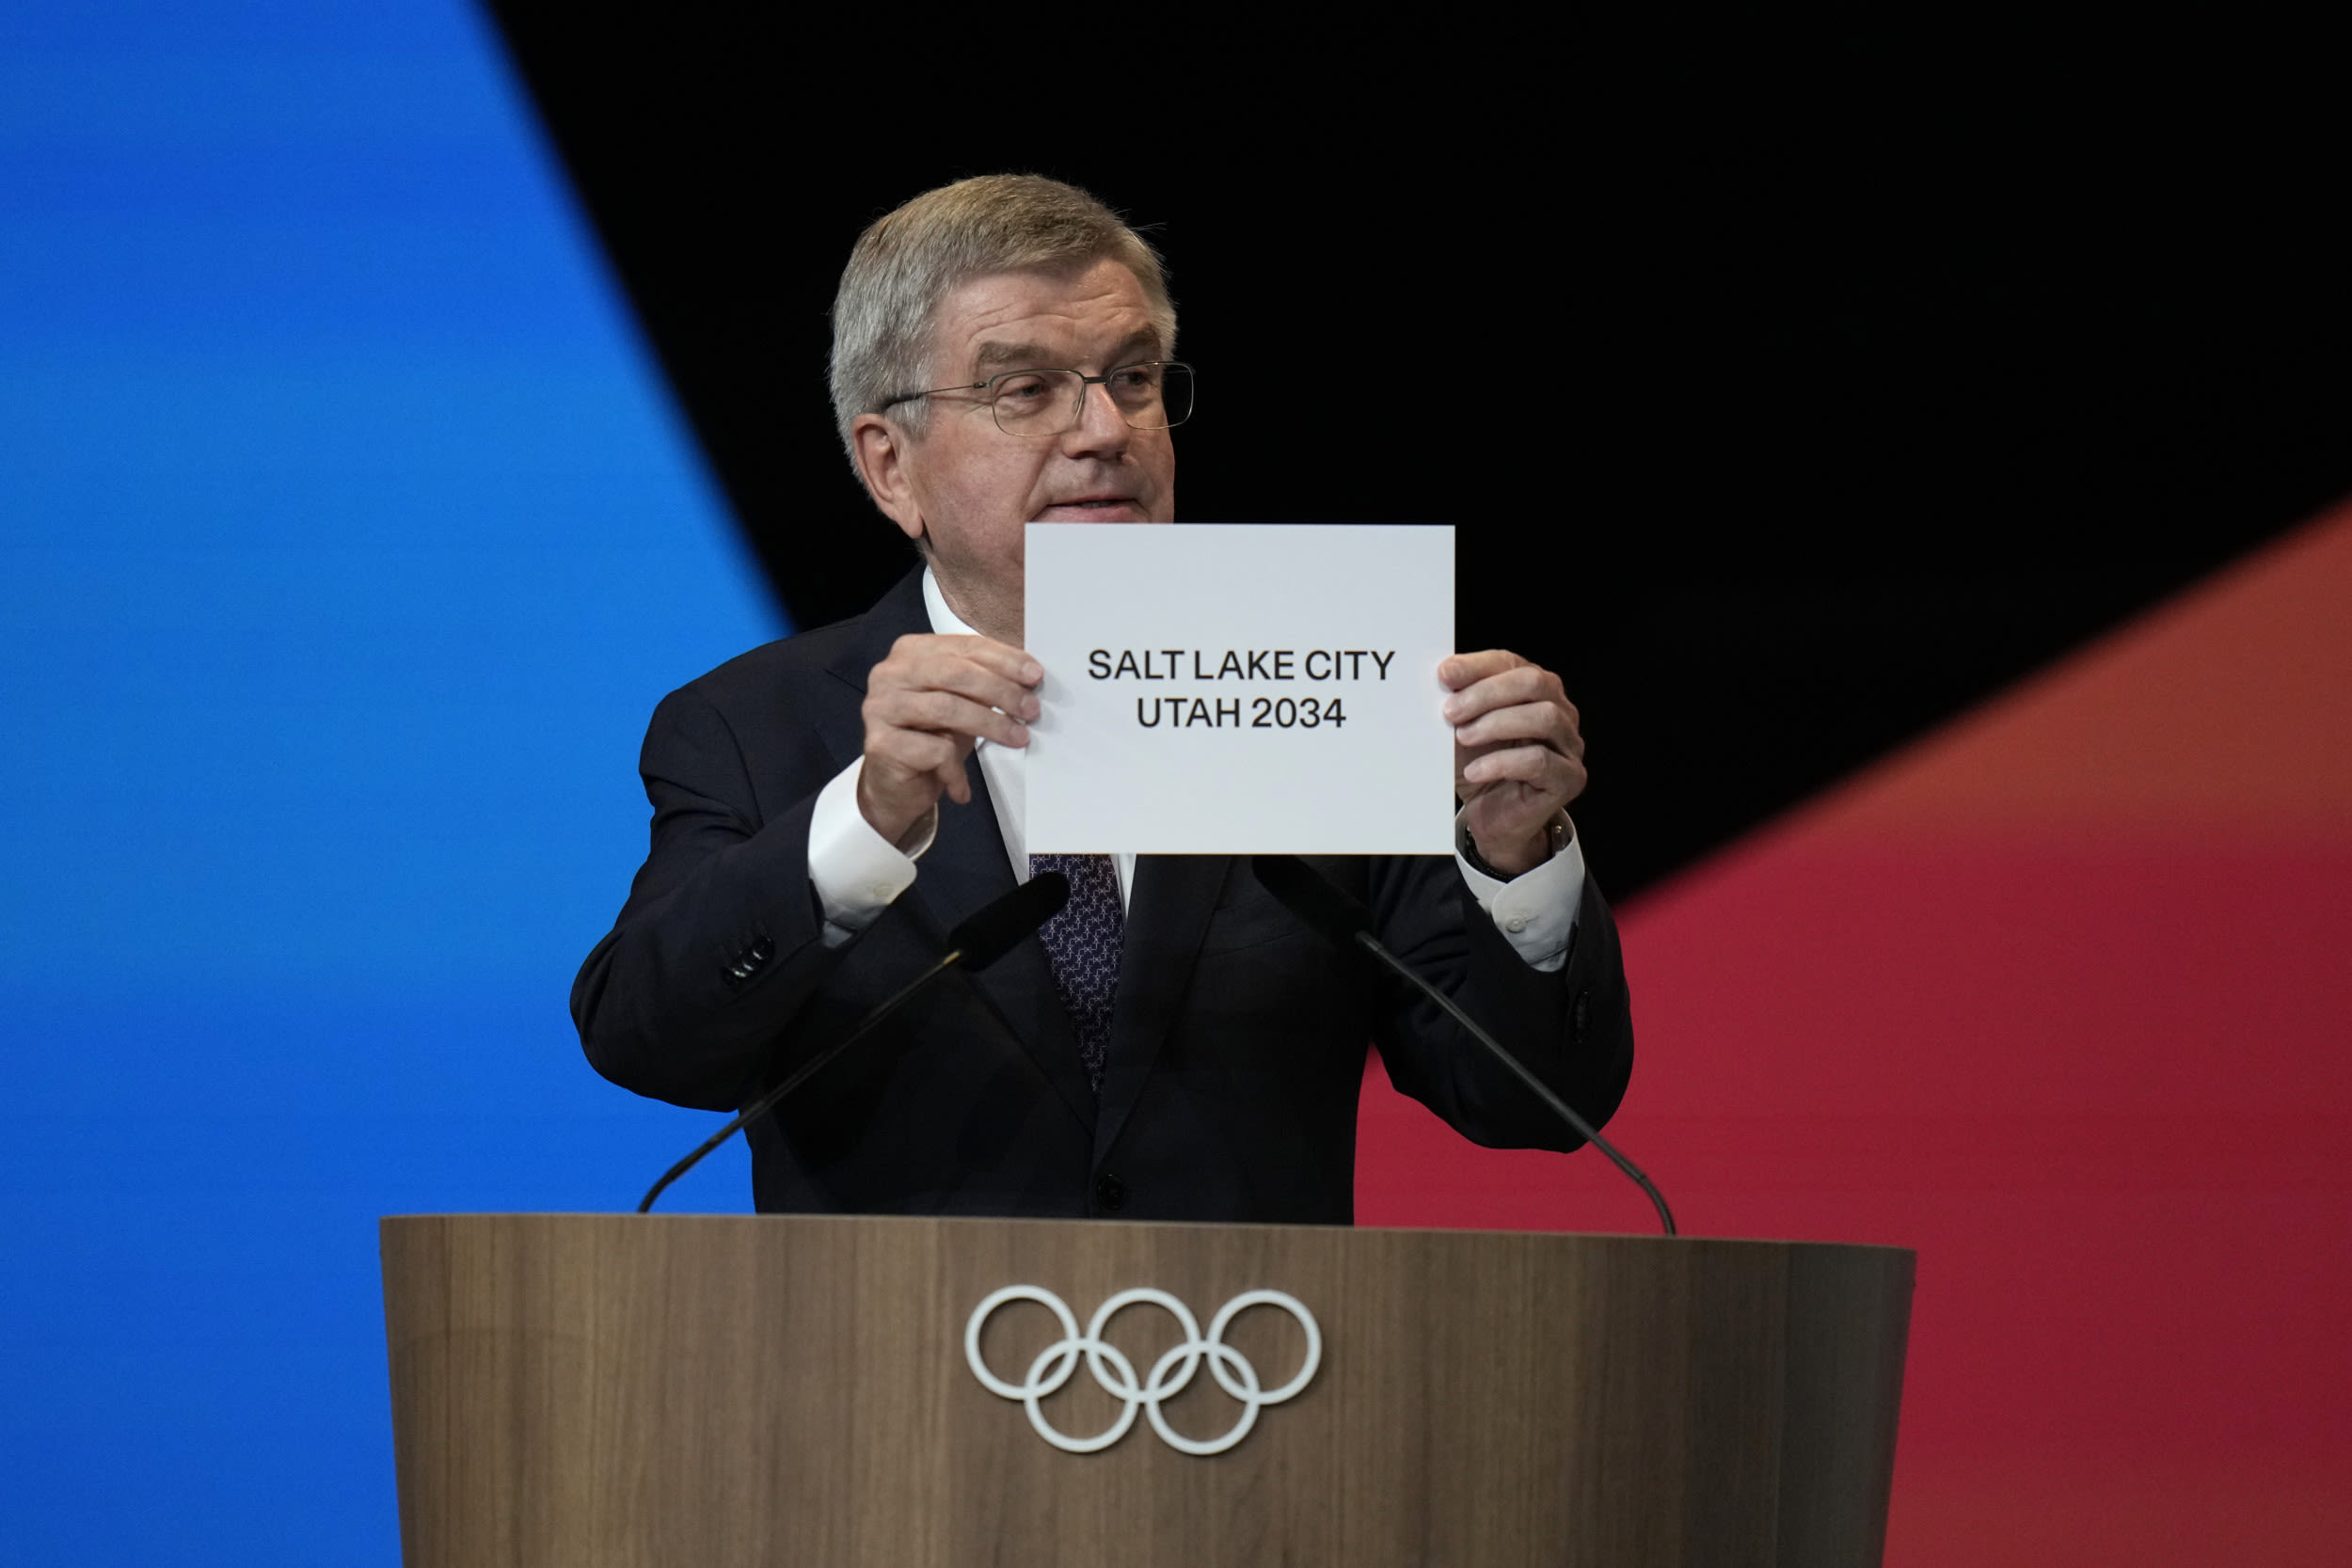 Salt Lake City Chosen to Host 2034 Winter Olympics by IOC